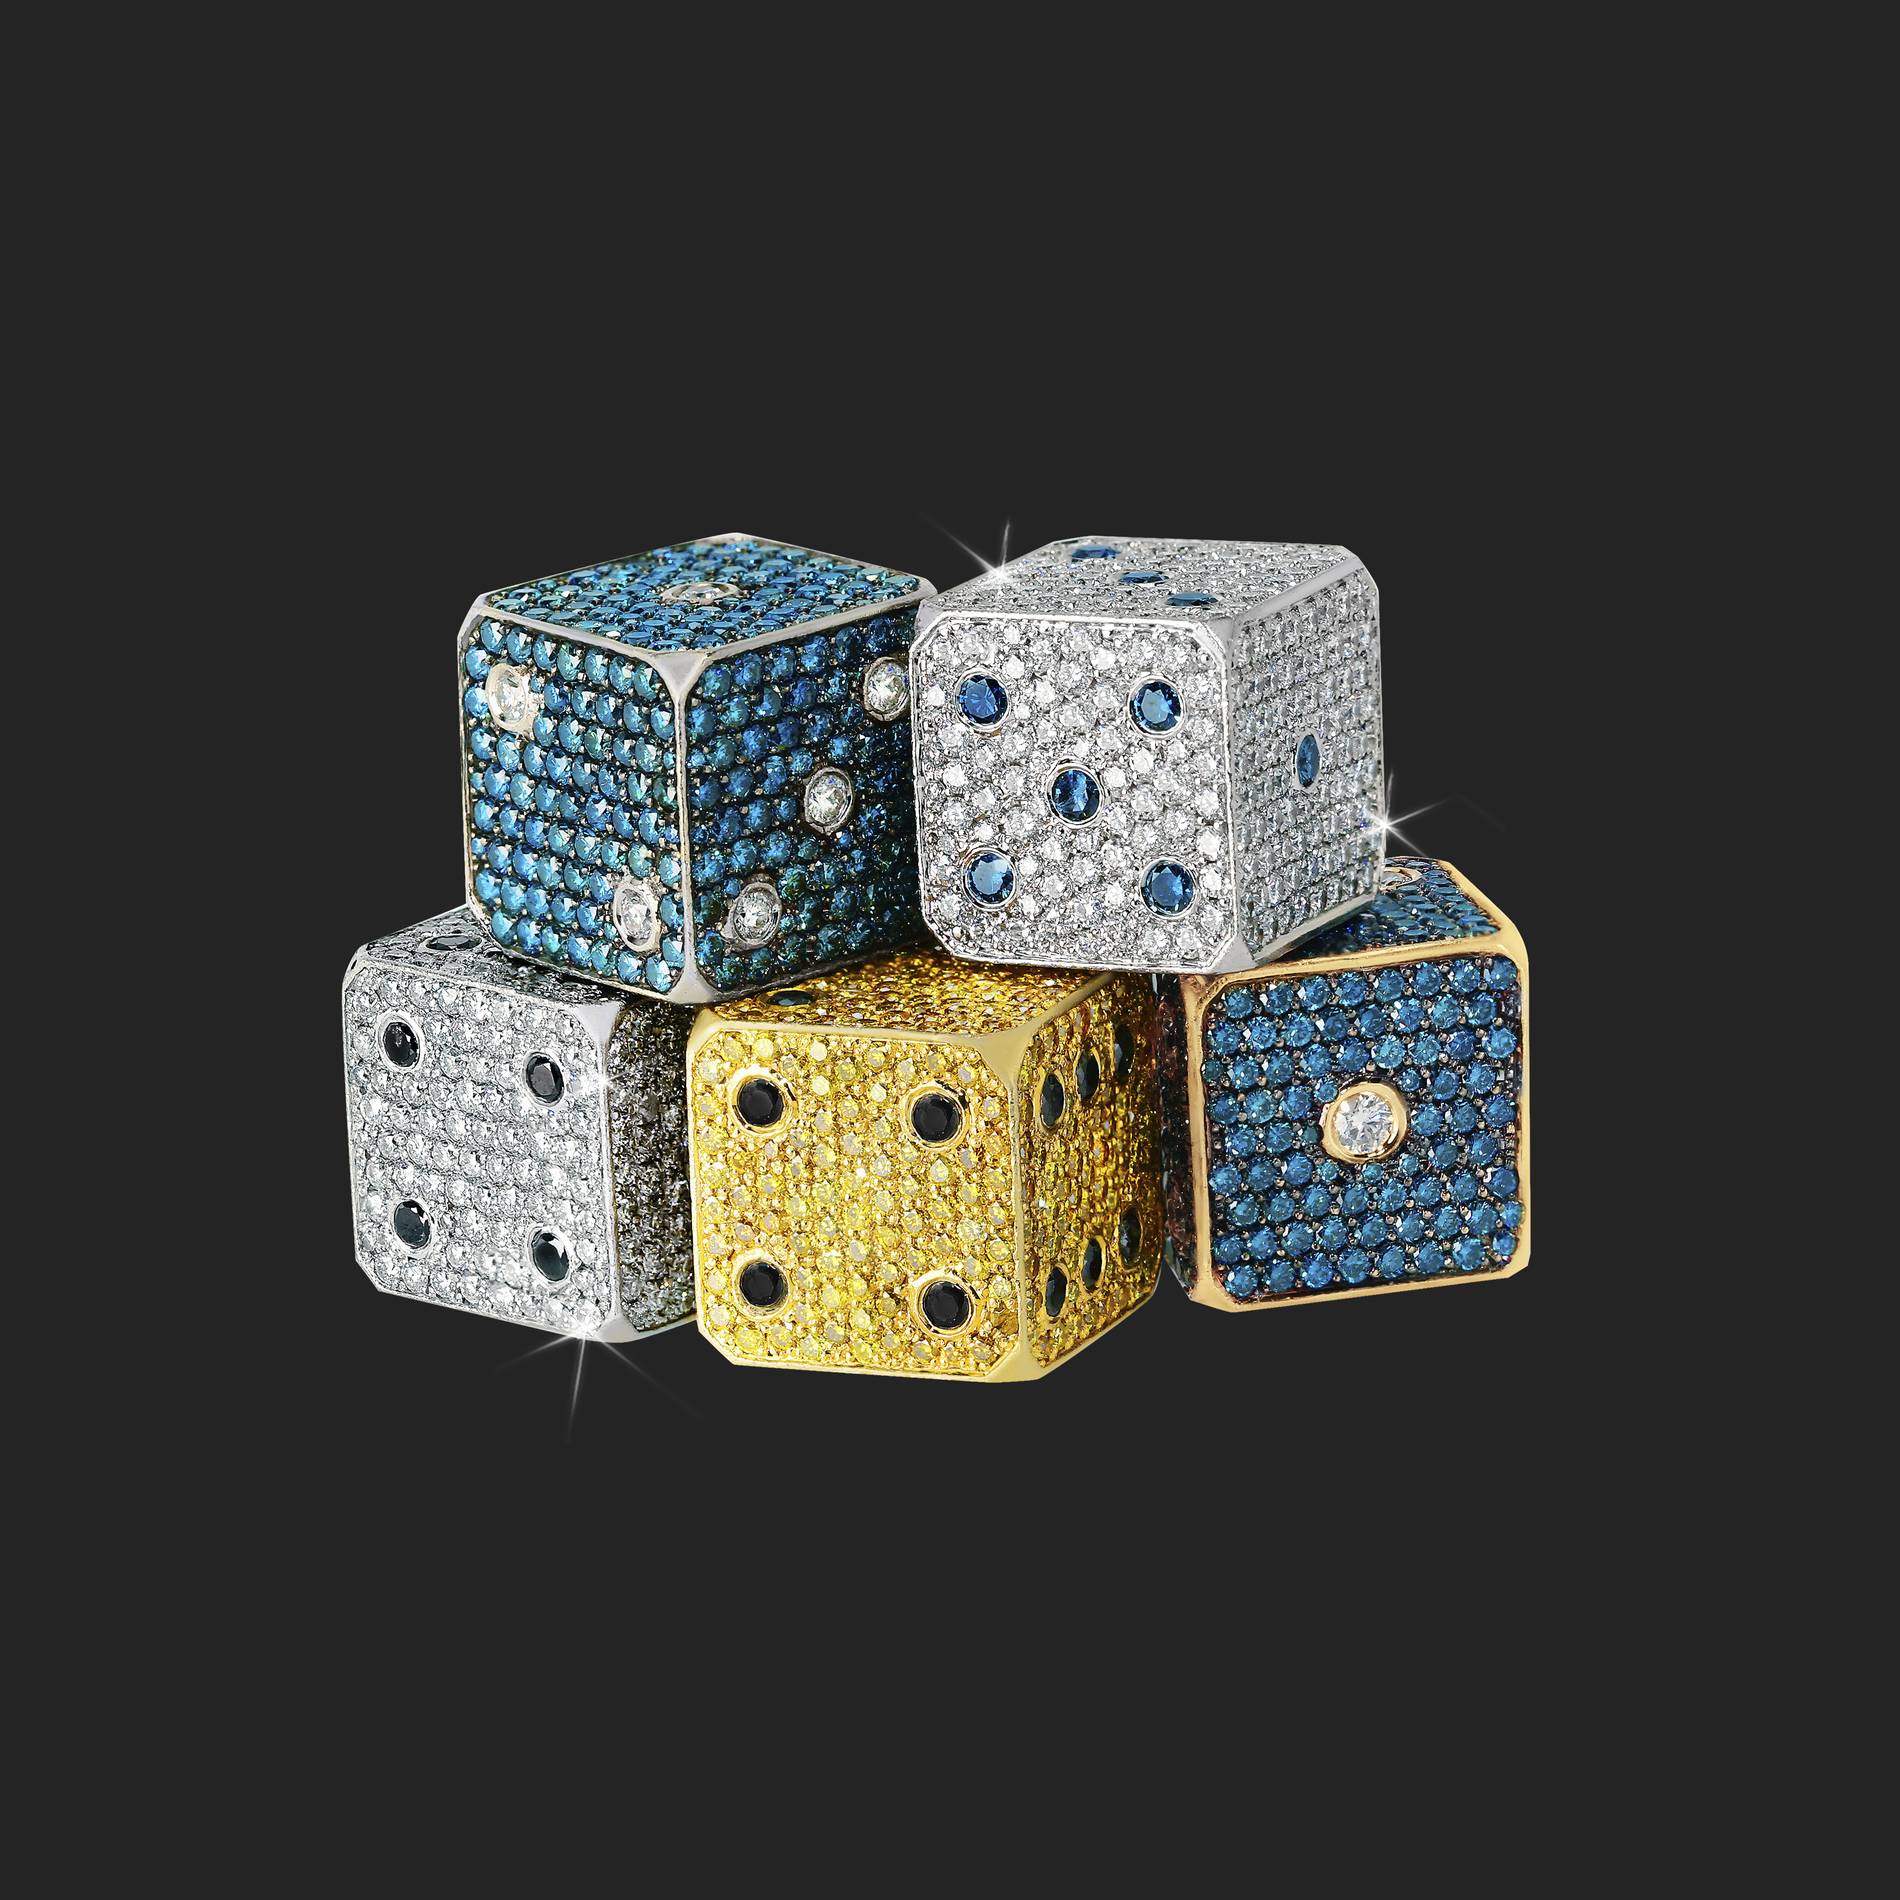 pharrell williams' dice pendant